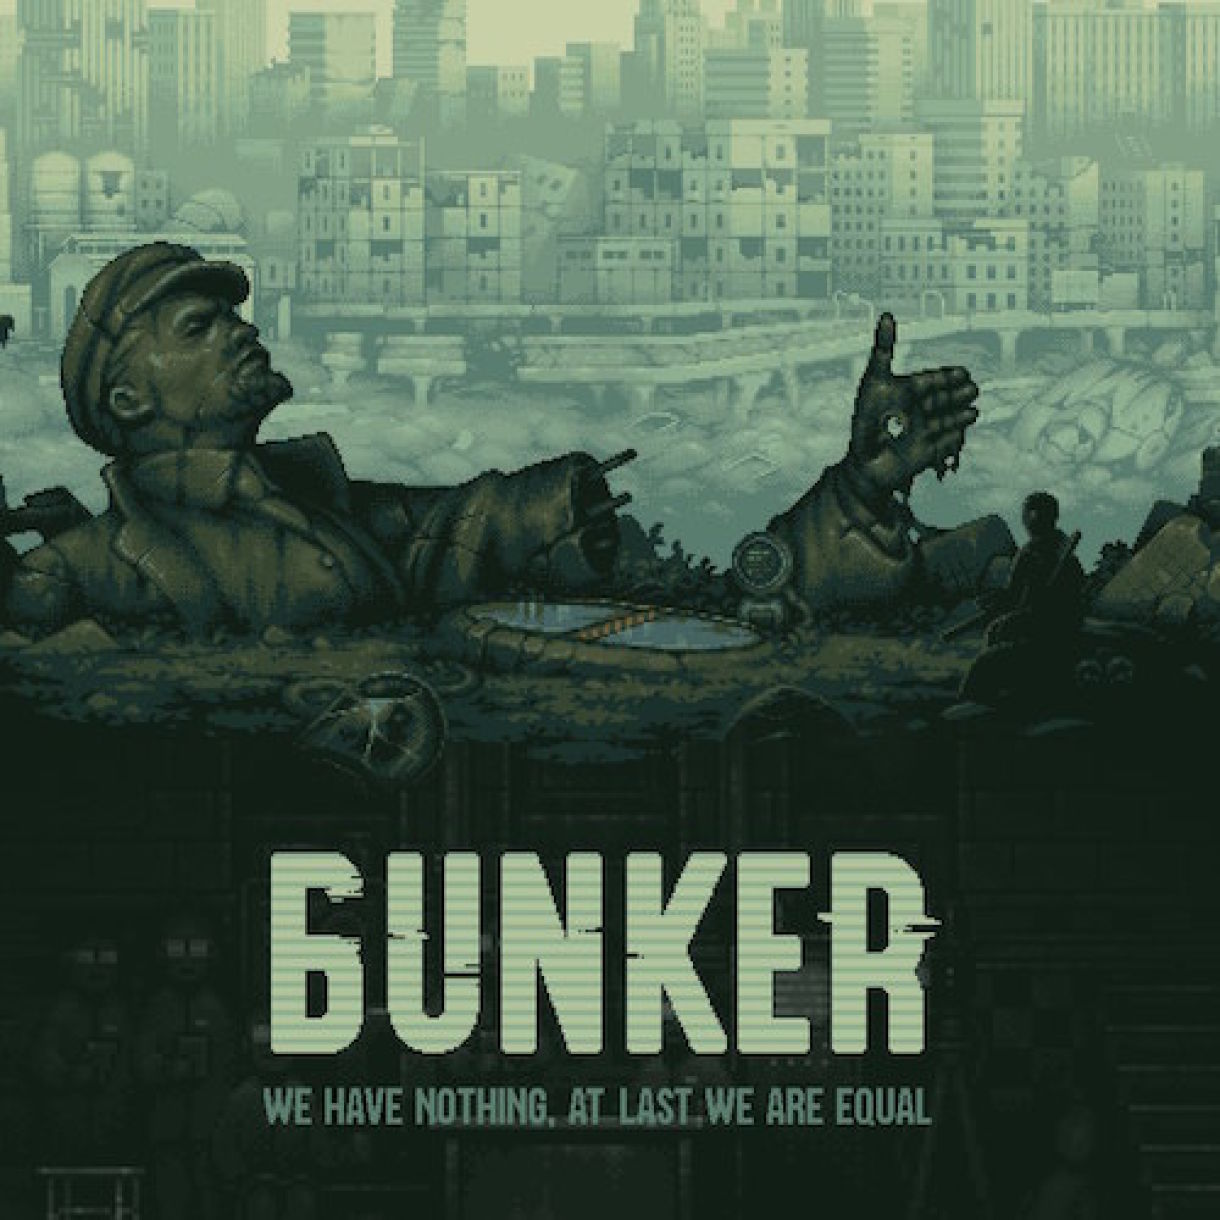 Pixel Art Online Game 'Bunker' From Eastern Europe